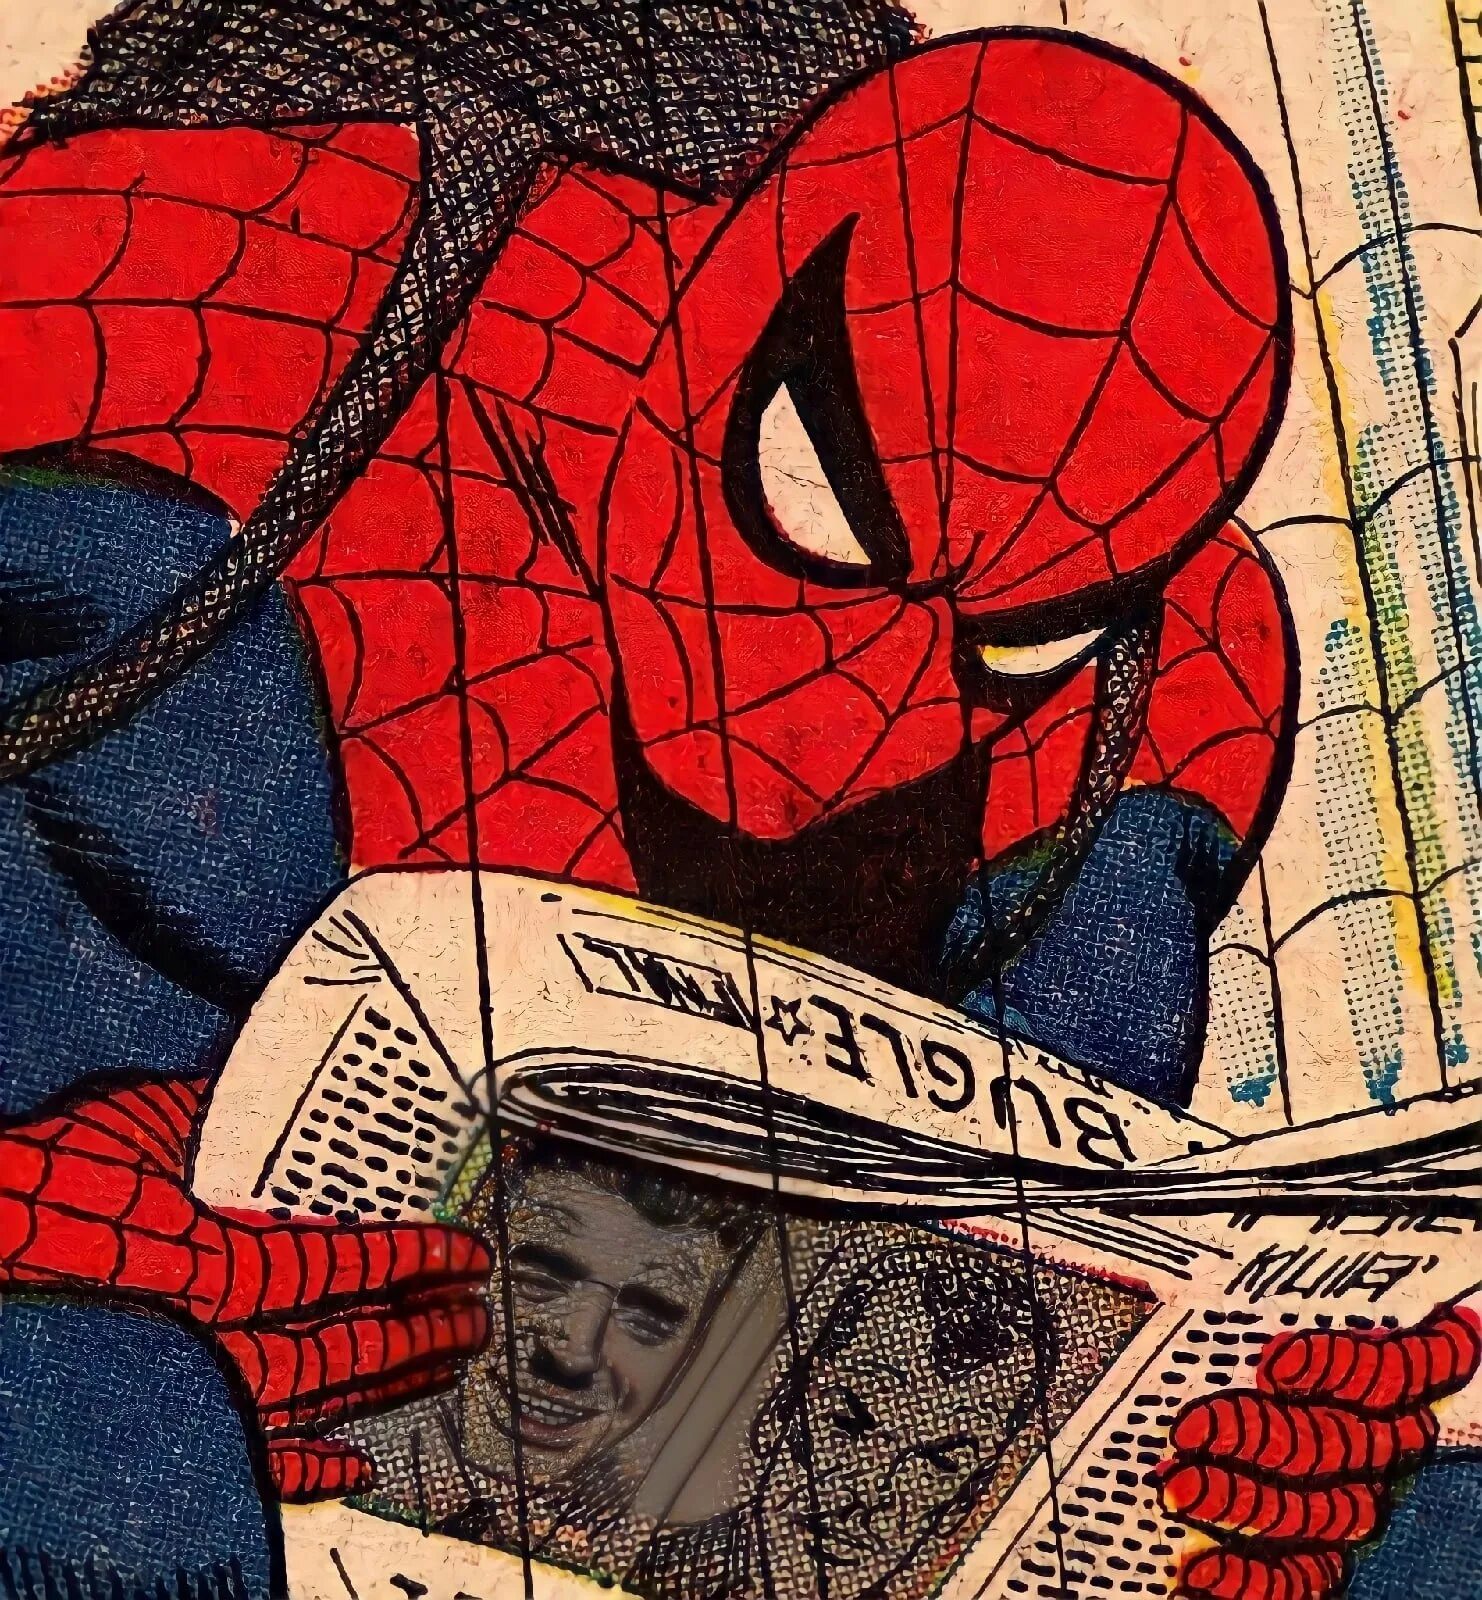 Spider man комикс. Человек паук Marvel Comics. Человек паук Джон Ромита. Комиксы Марвел Spider man.